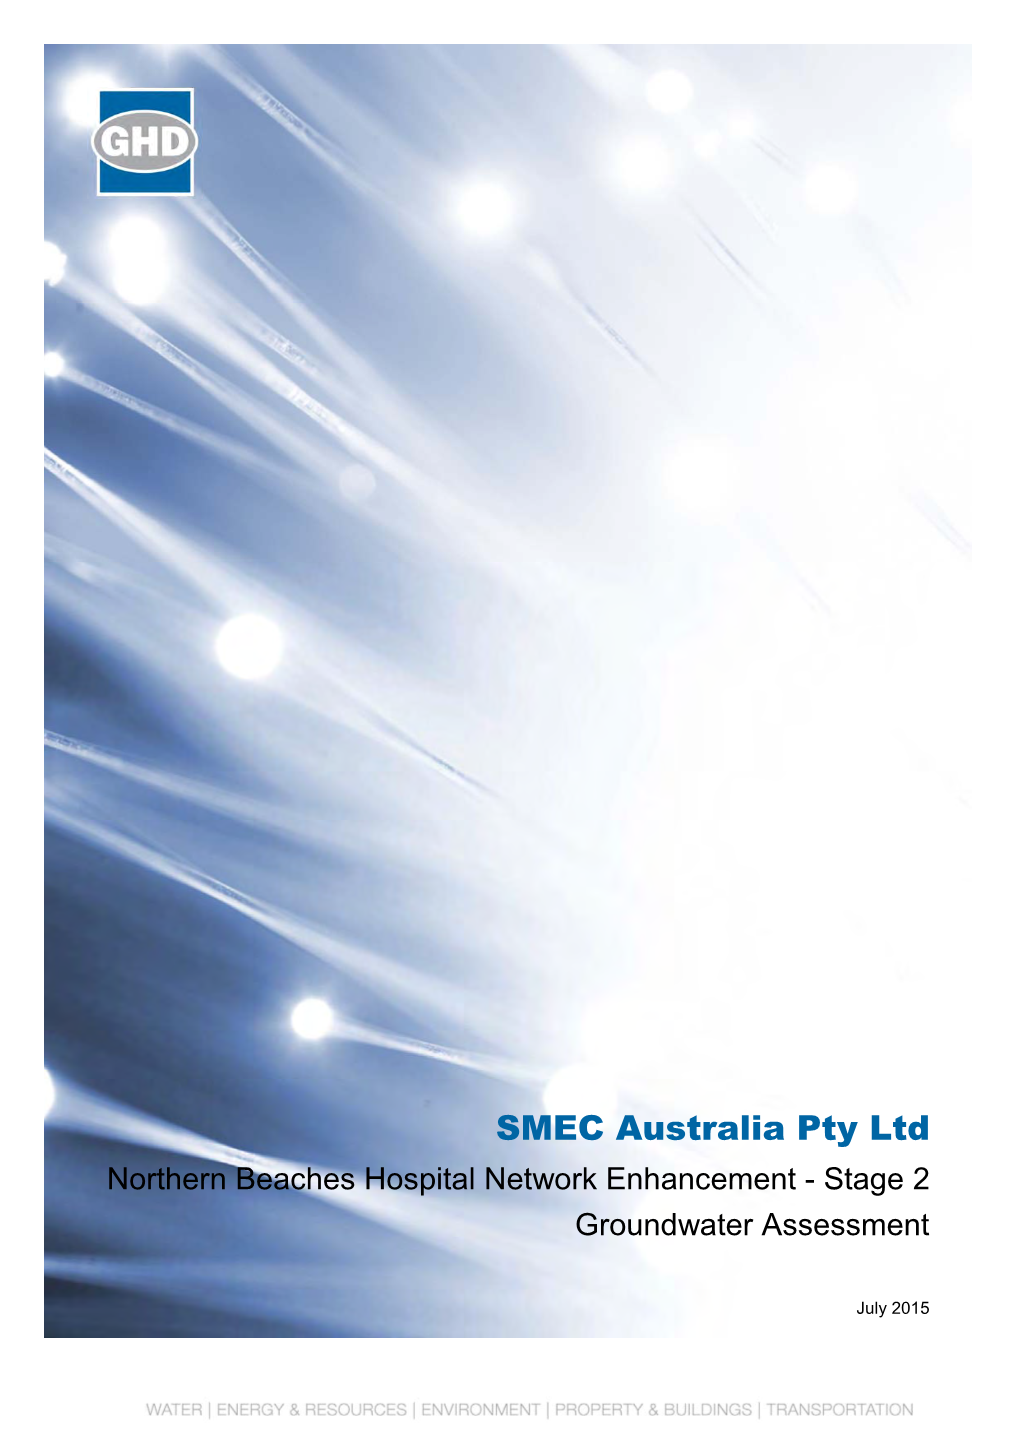 SMEC Australia Pty Ltd Northern Beaches Hospital Network Enhancement - Stage 2 Groundwater Assessment